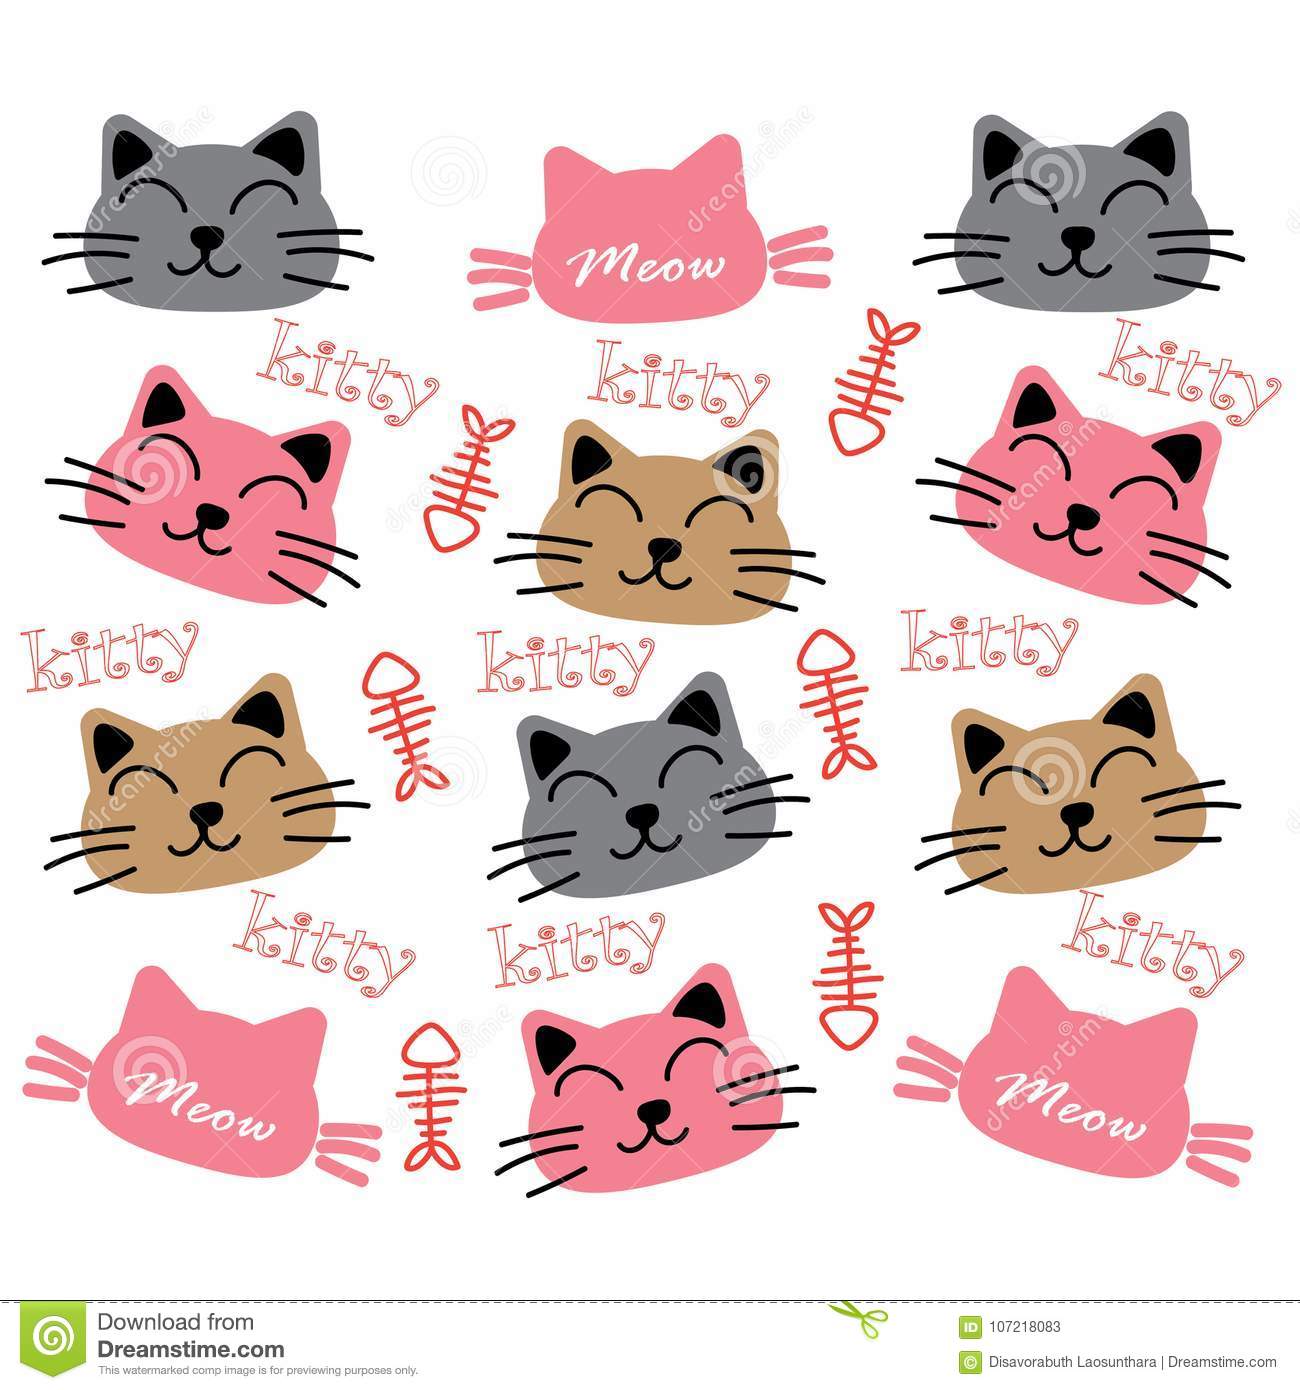 Cat wallpaper background stock vector illustration of nature